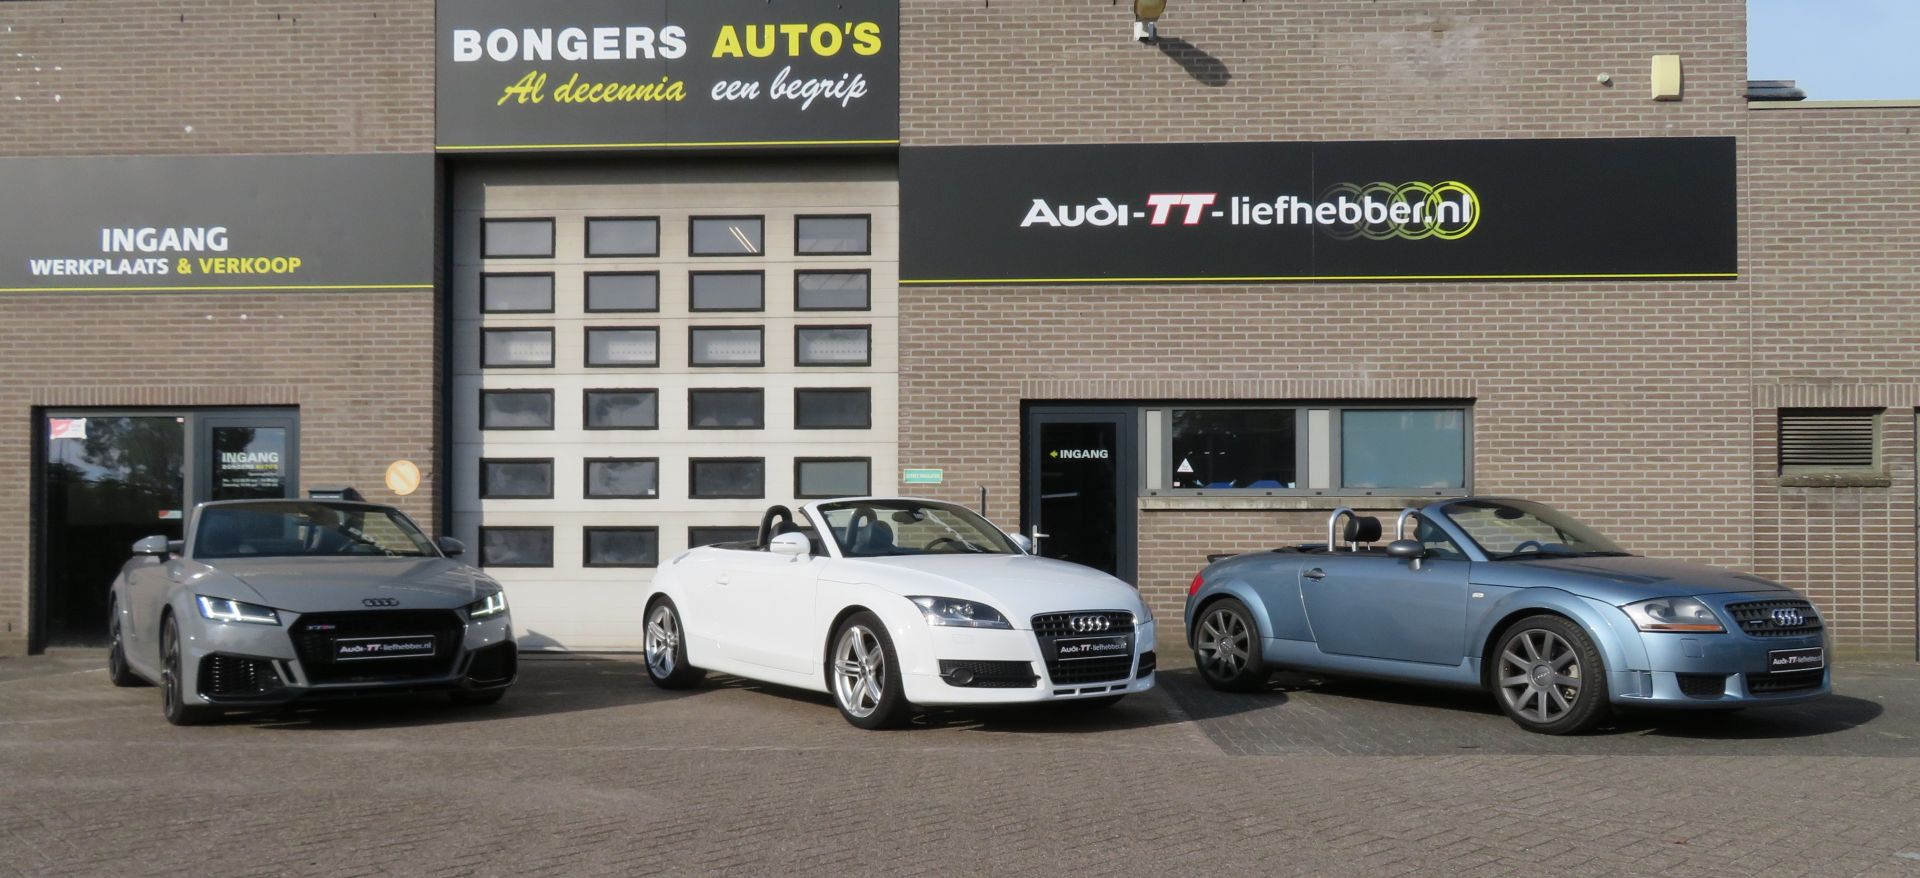 Bongers Auto's - Audi-TT Liefhebber